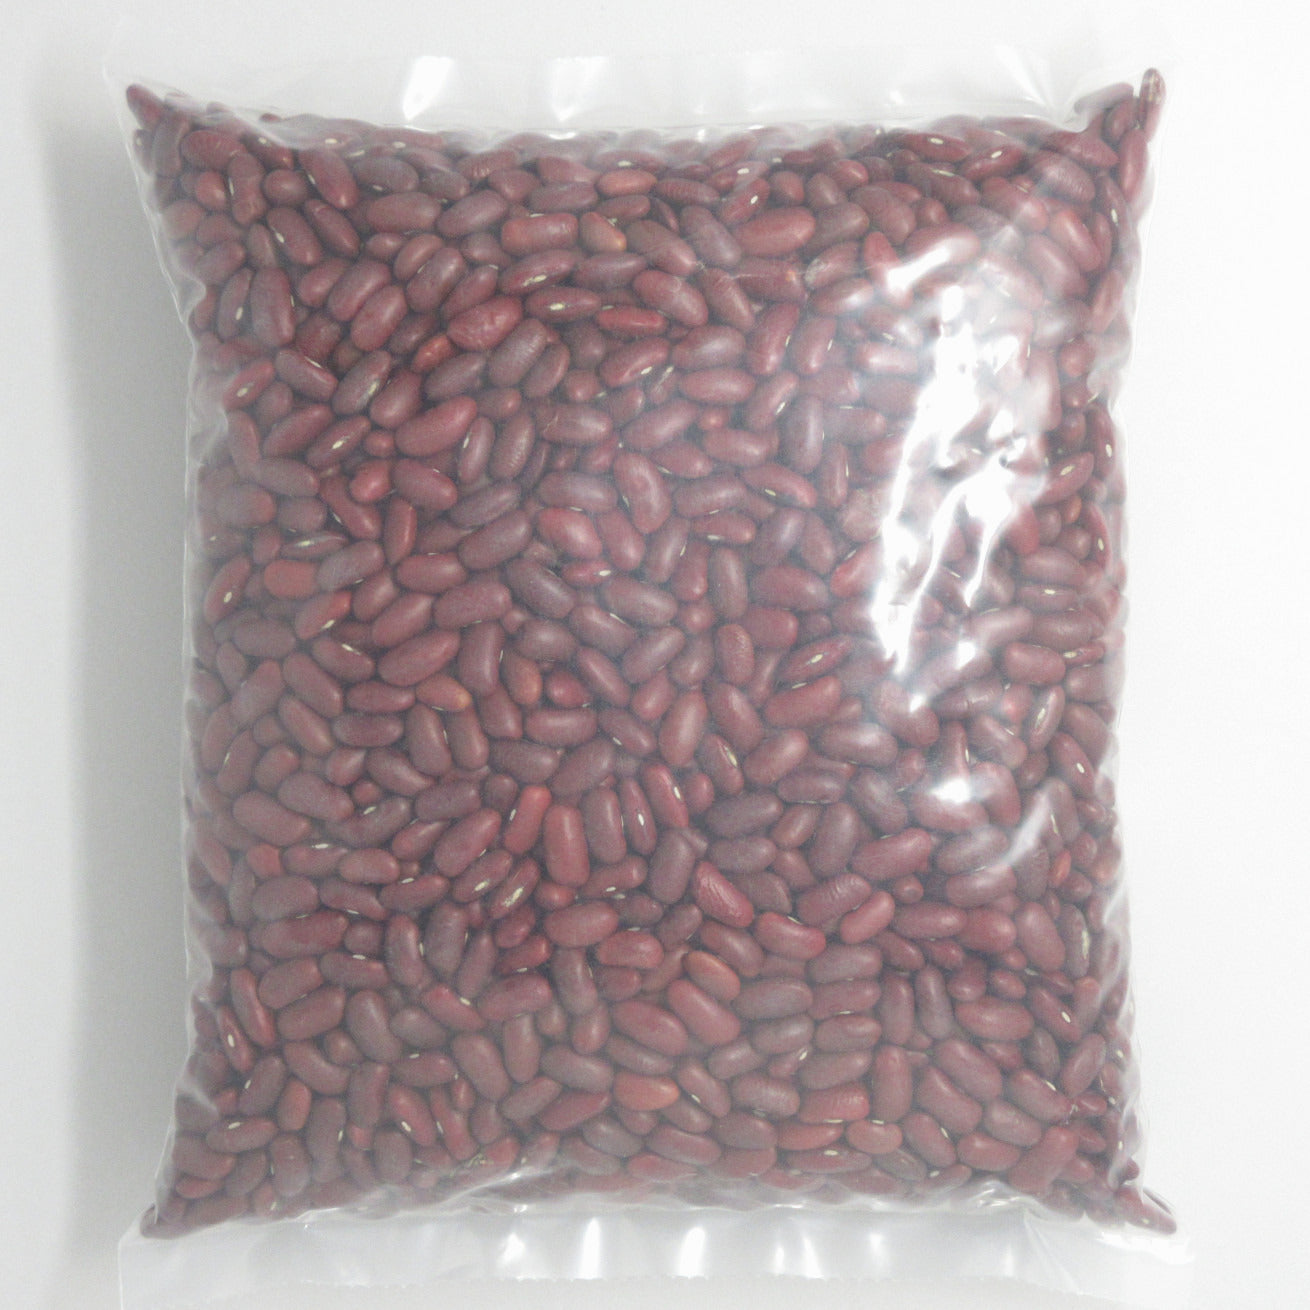 Flour Barrel product image - Dark Red Kidney Beans